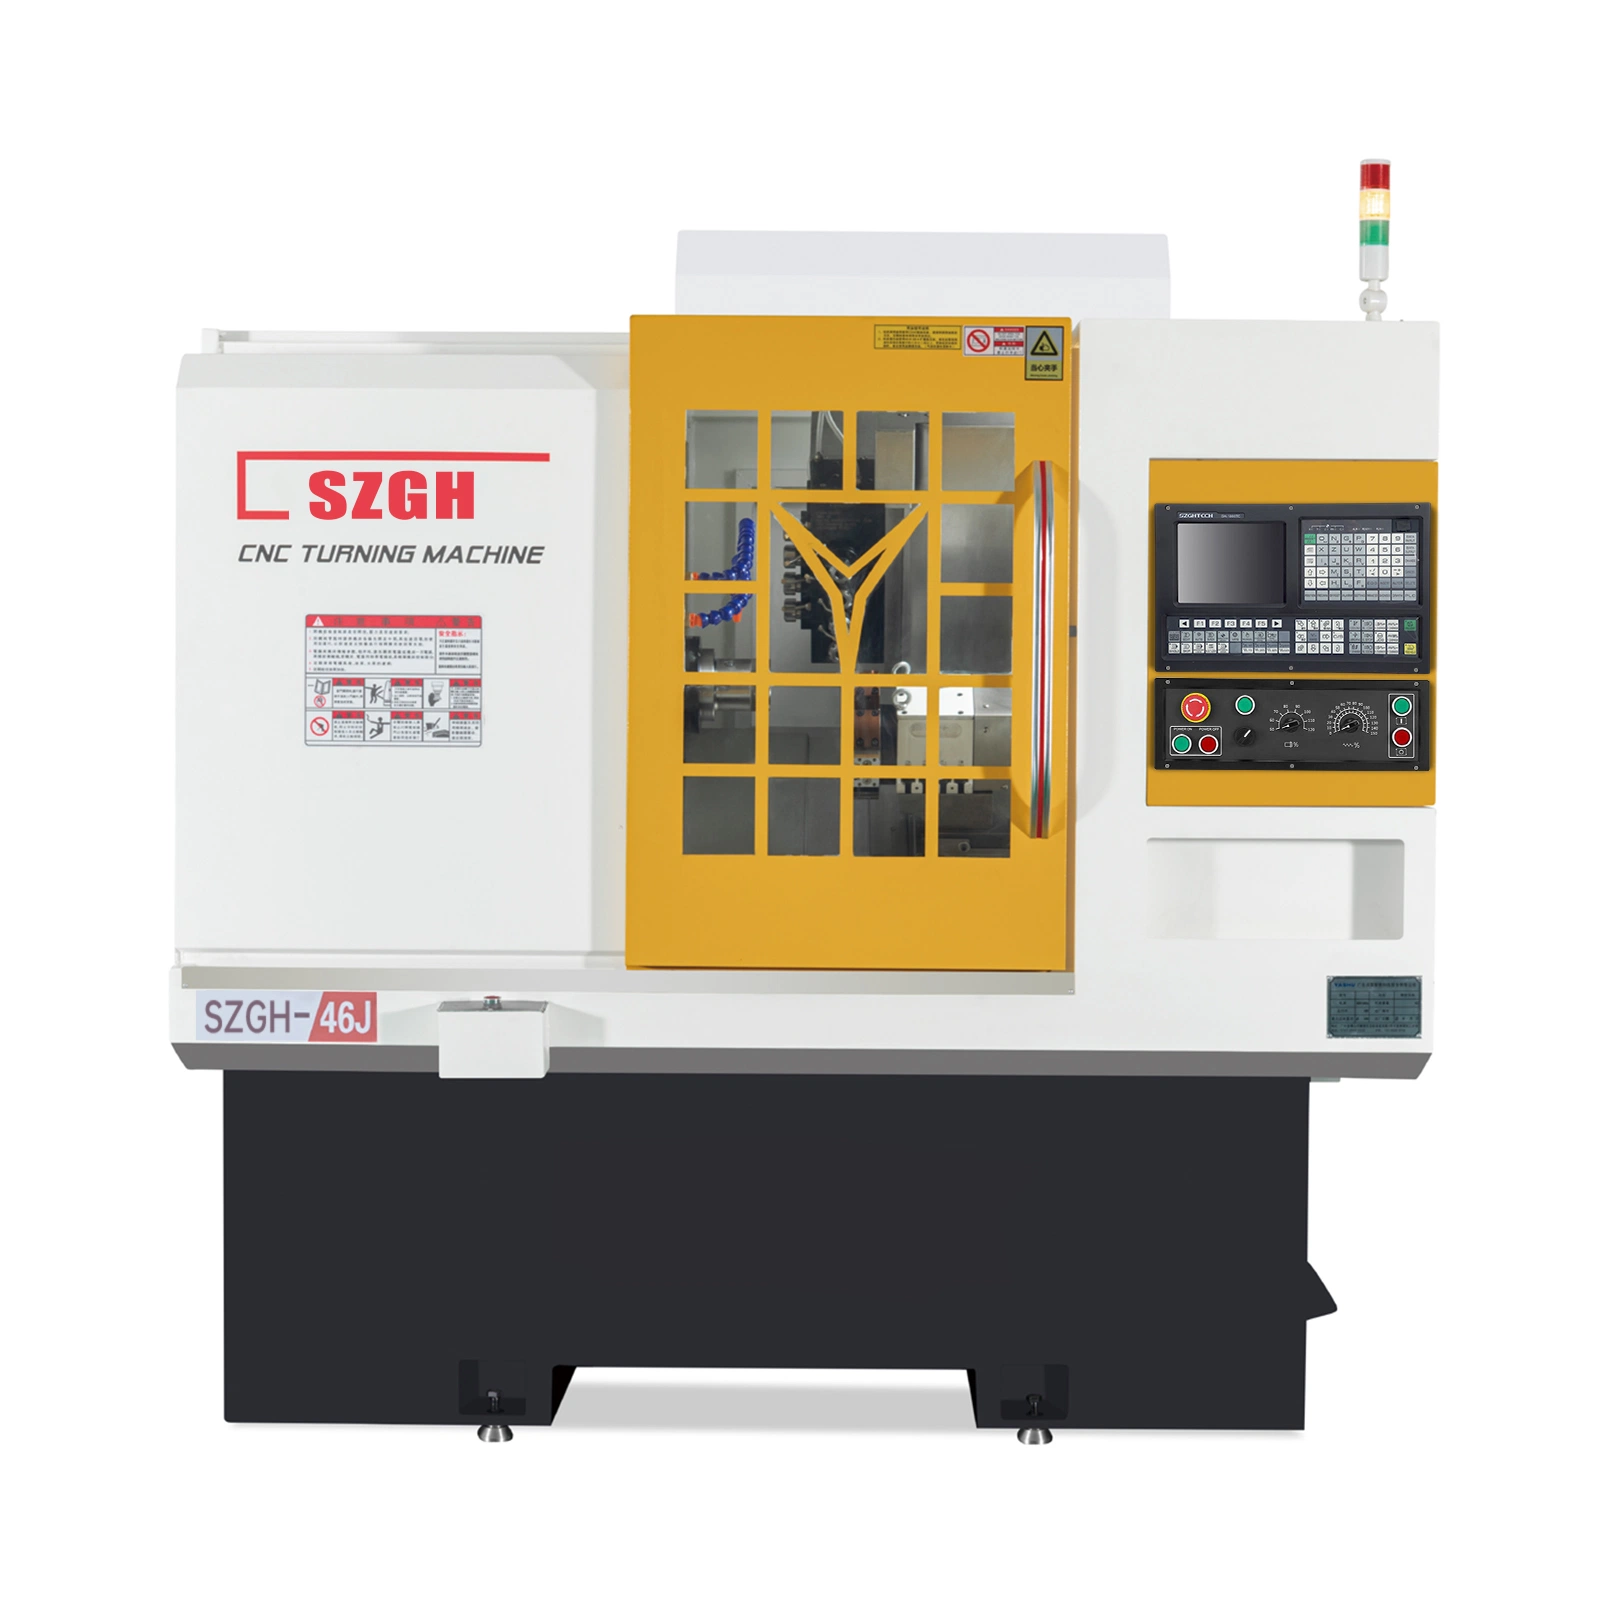 Szgh CNC Lathe Machine Manufacturer CNC Turning Engraving Milling Machinery Hot Sale